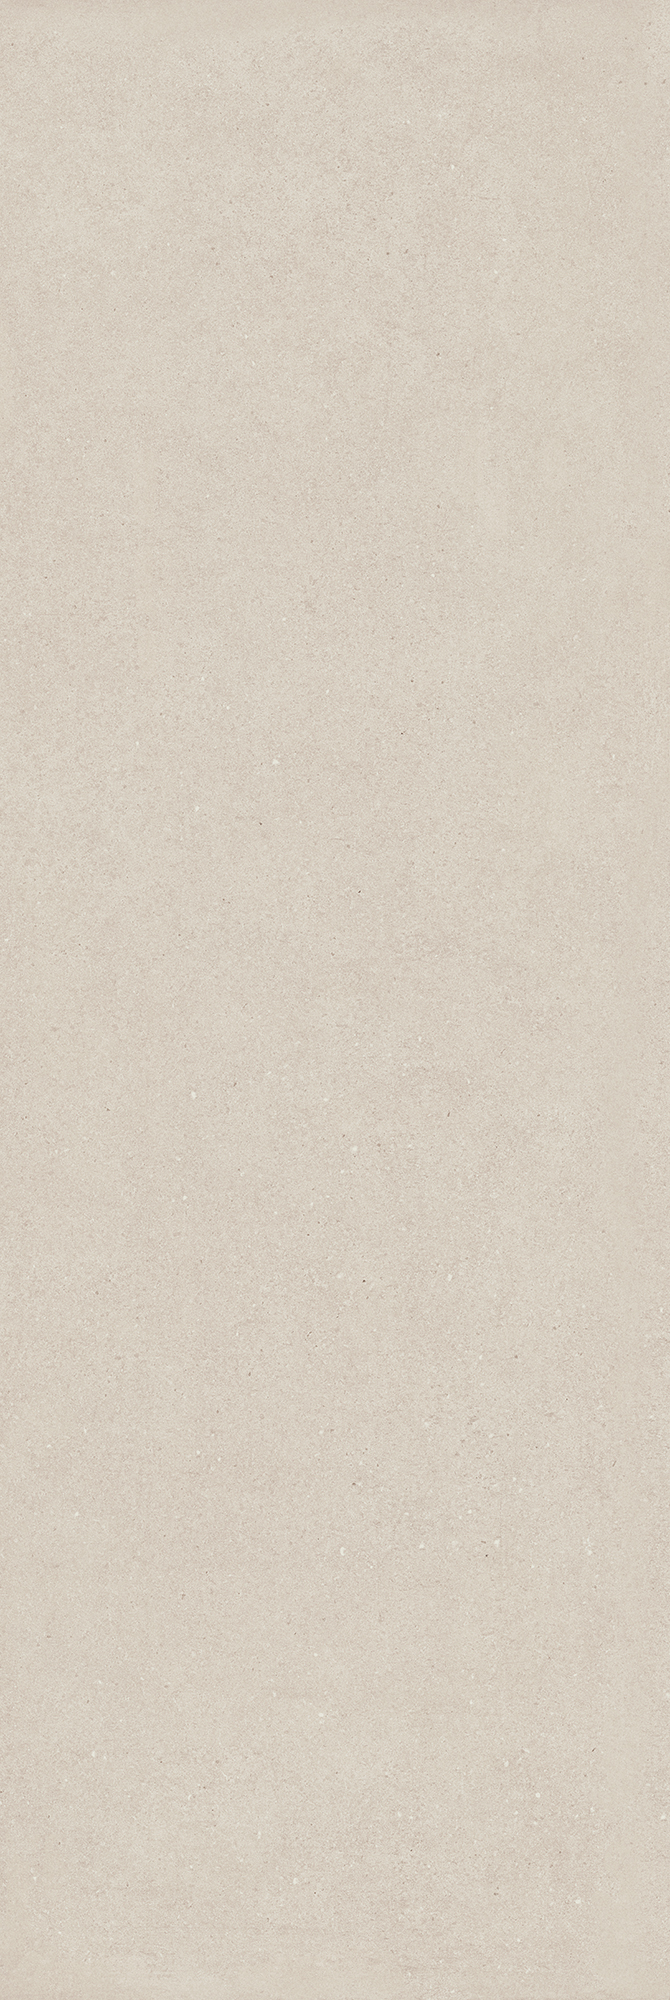 14045R Настенная Монсеррат Бежевая Светлая Матовая Обрезная - фото 2